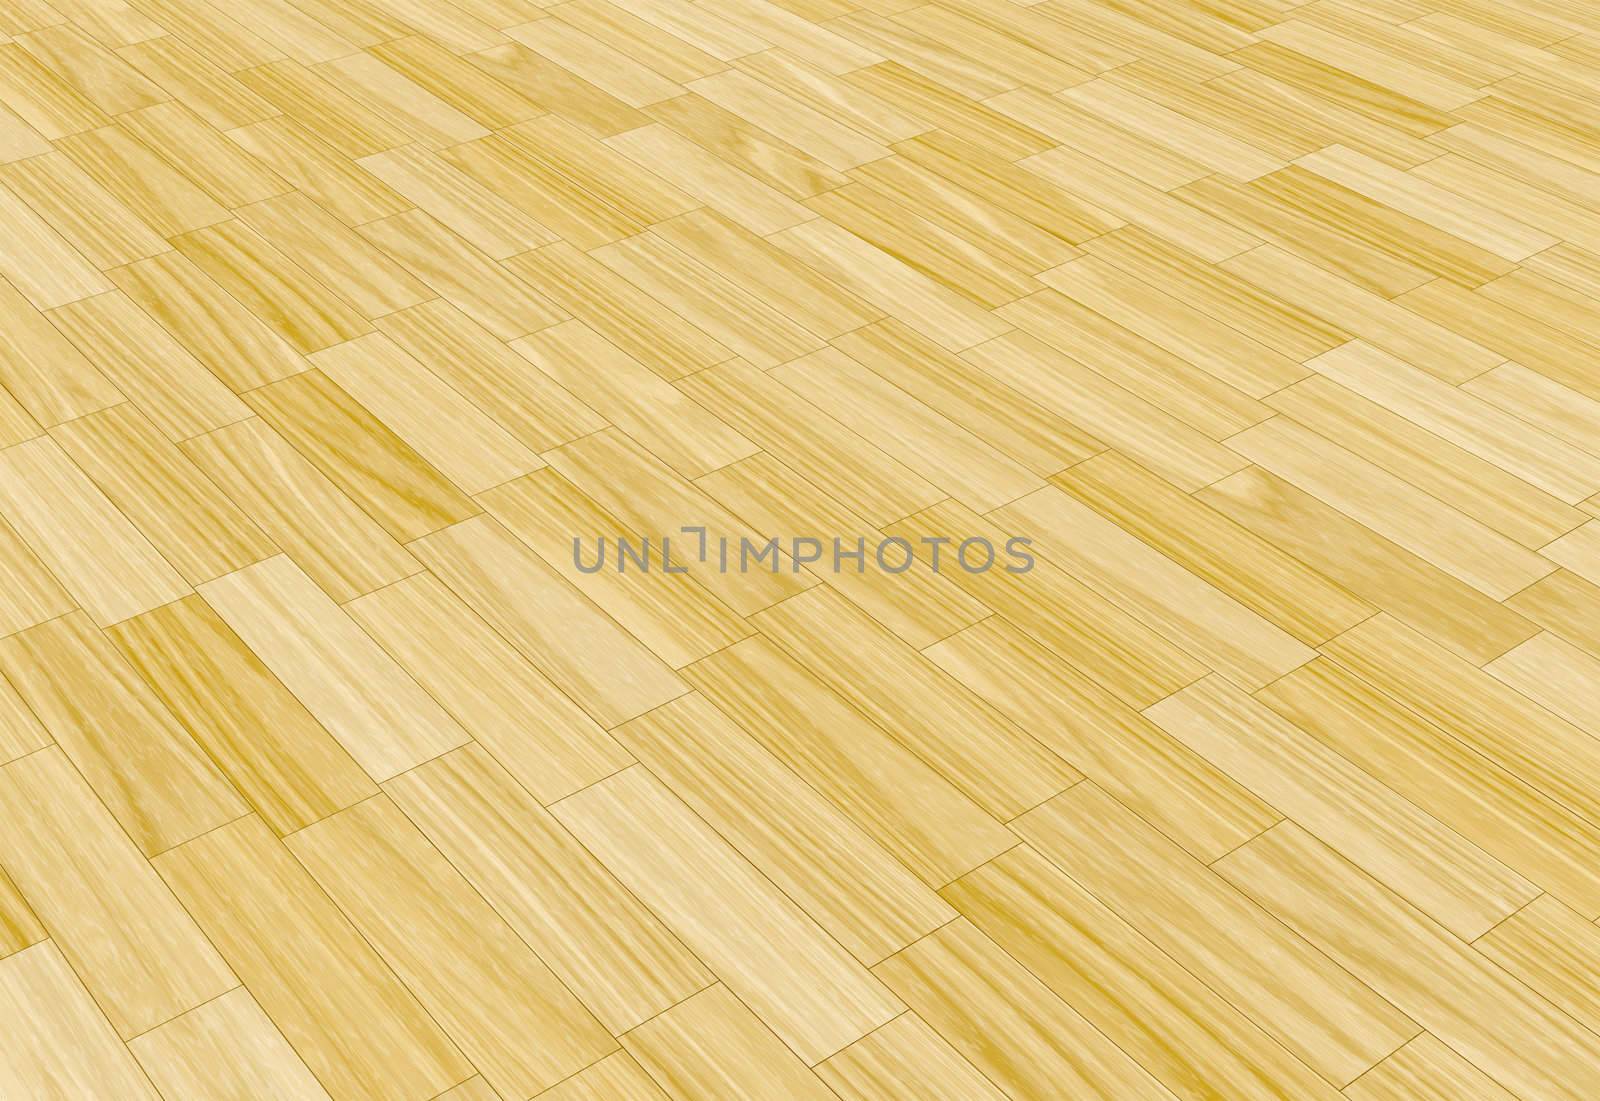 wood laminate floor by clearviewstock